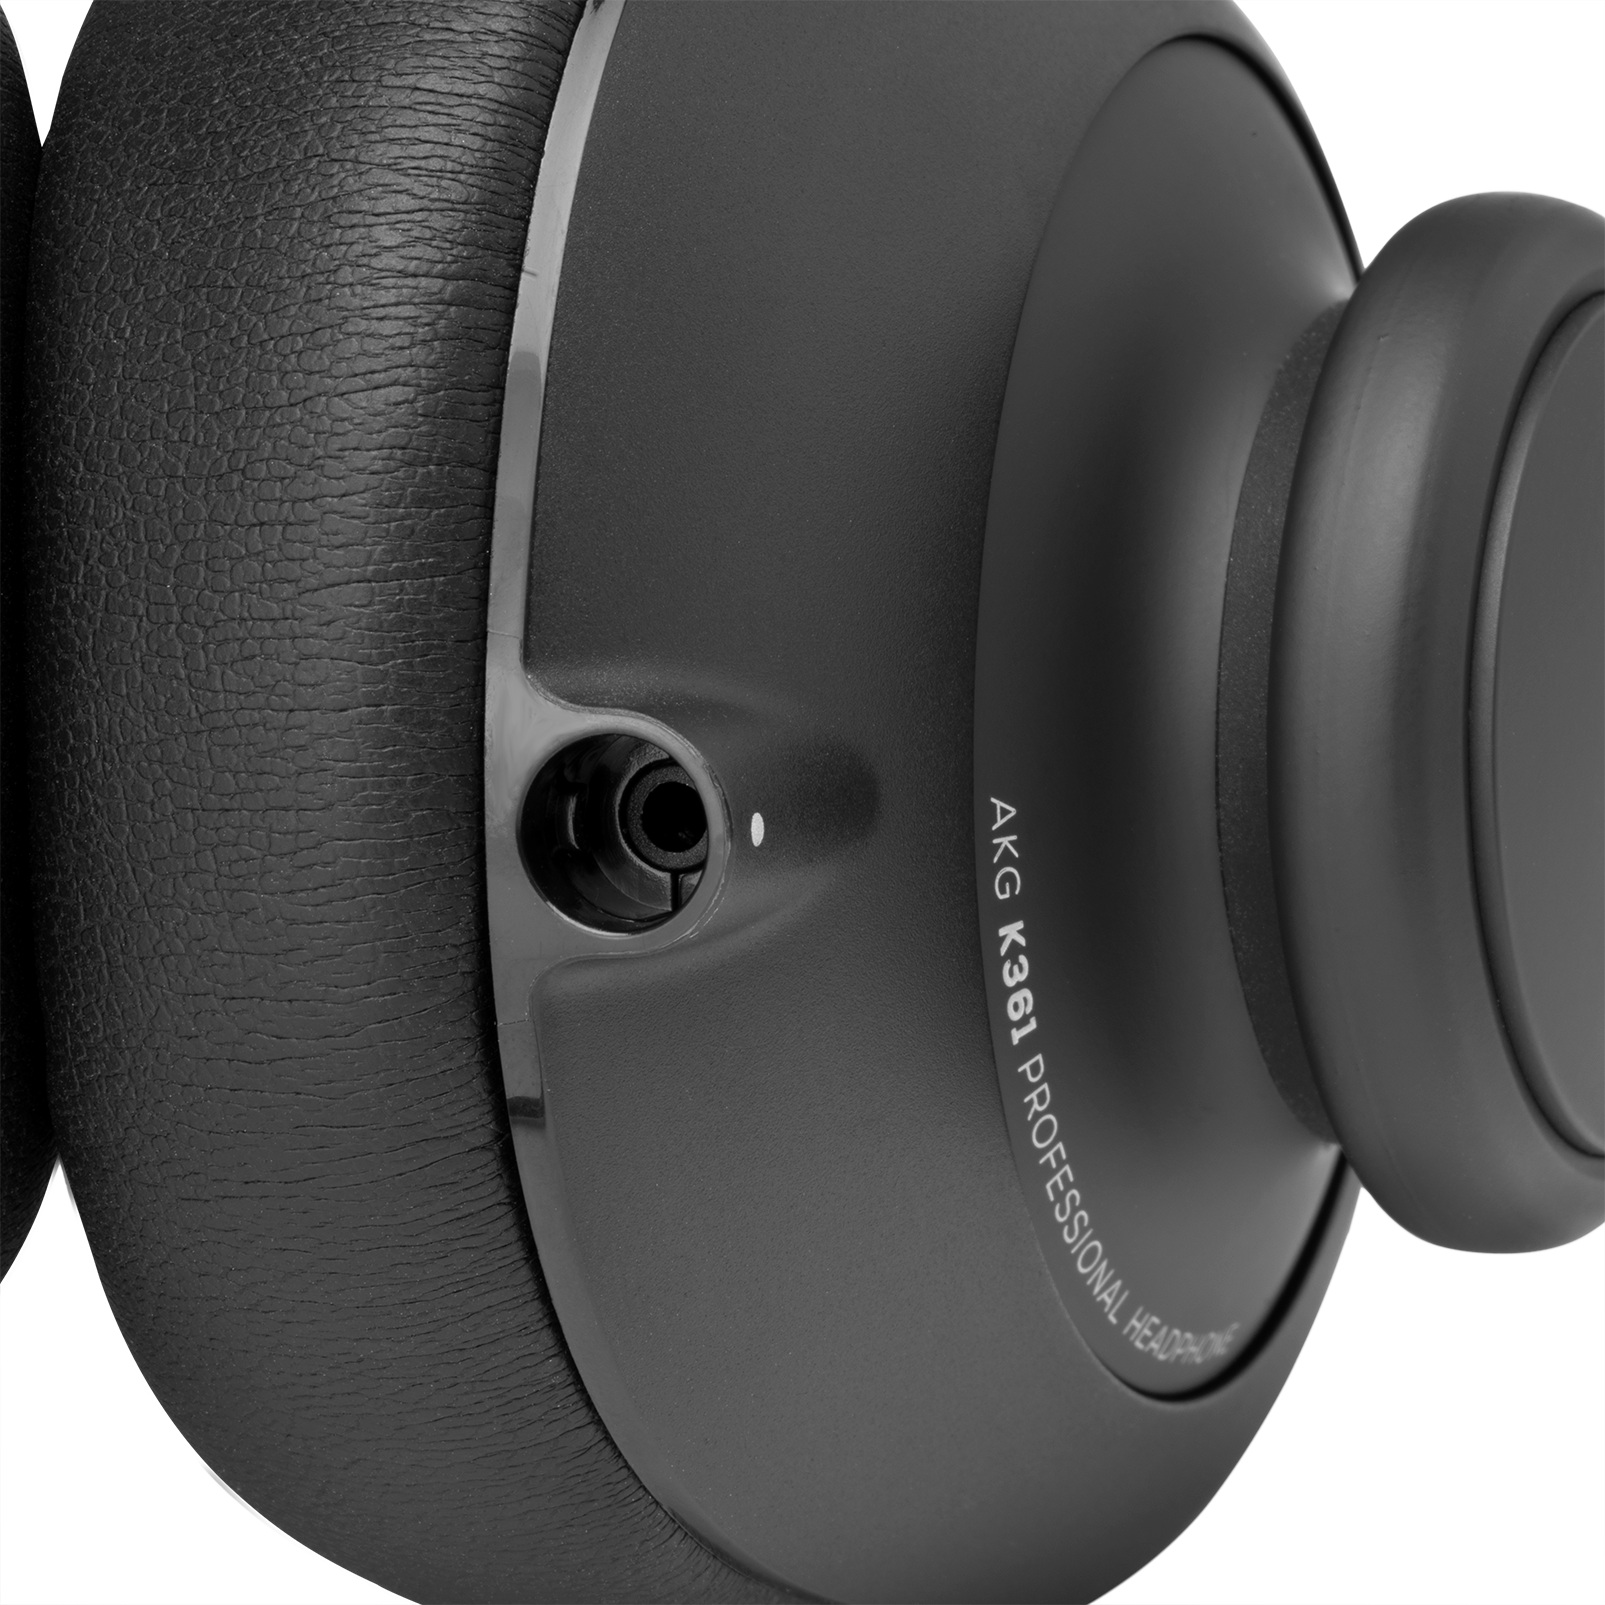 K361 - Black - Over-ear, closed-back, foldable studio headphones  - Detailshot 4